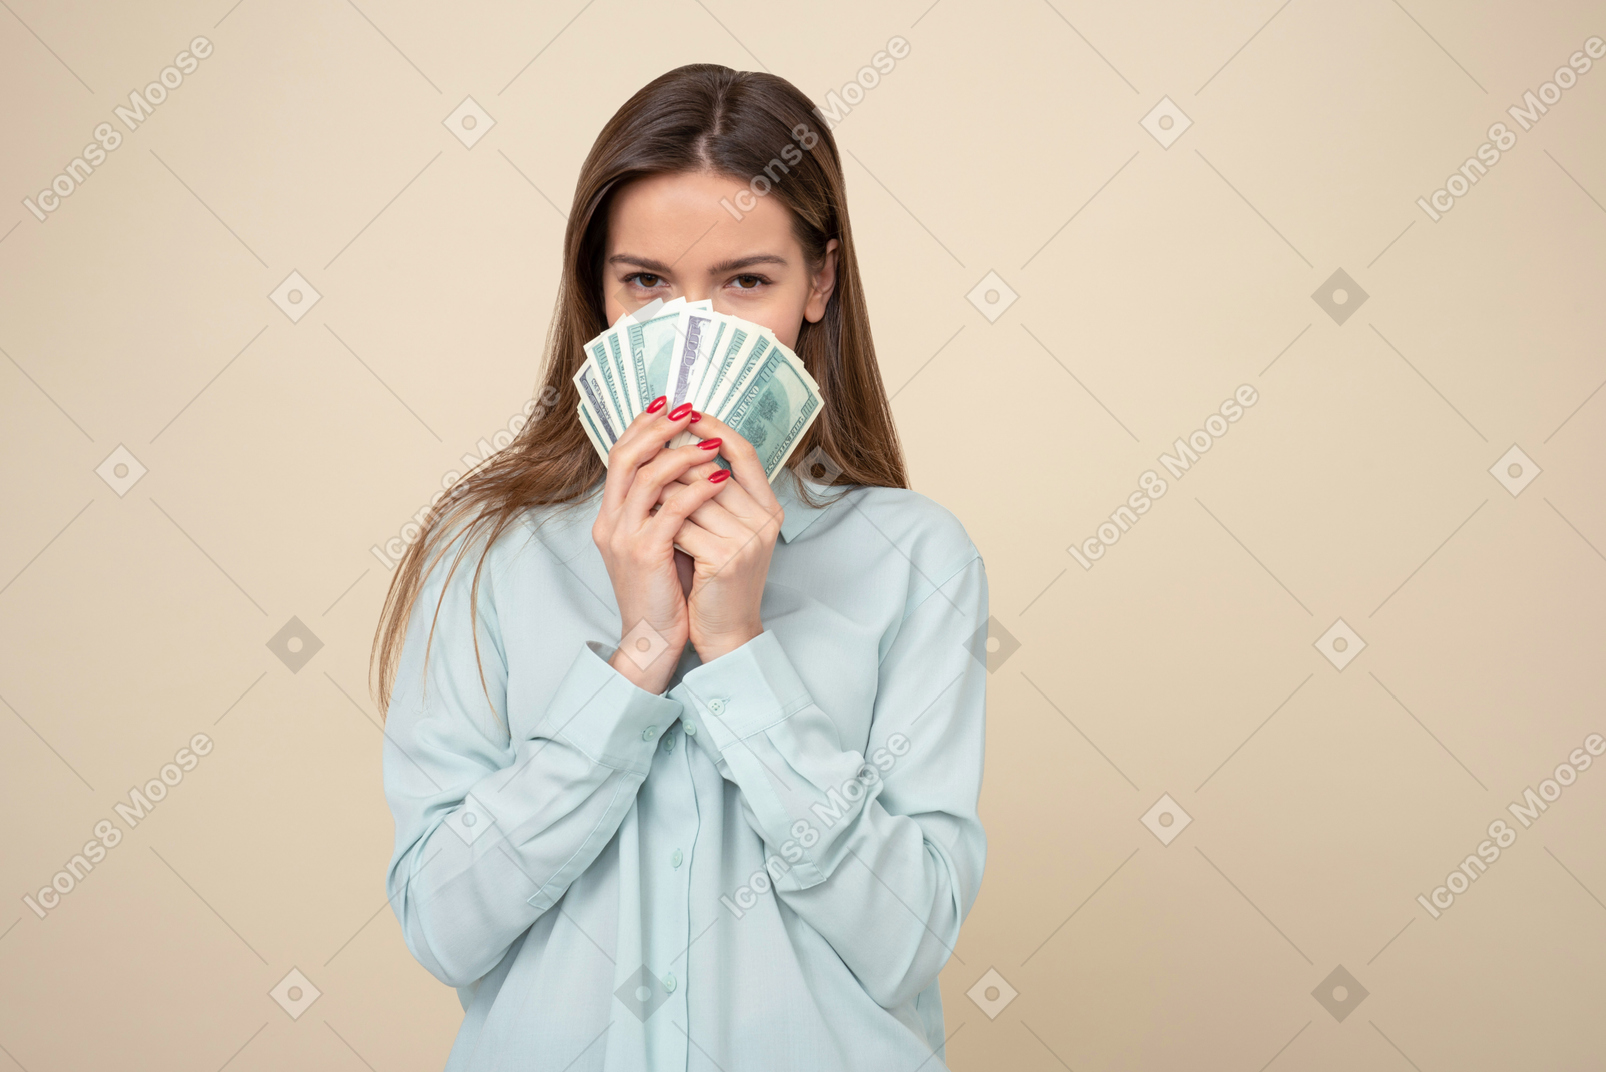 Attractive woman holding dollar bills